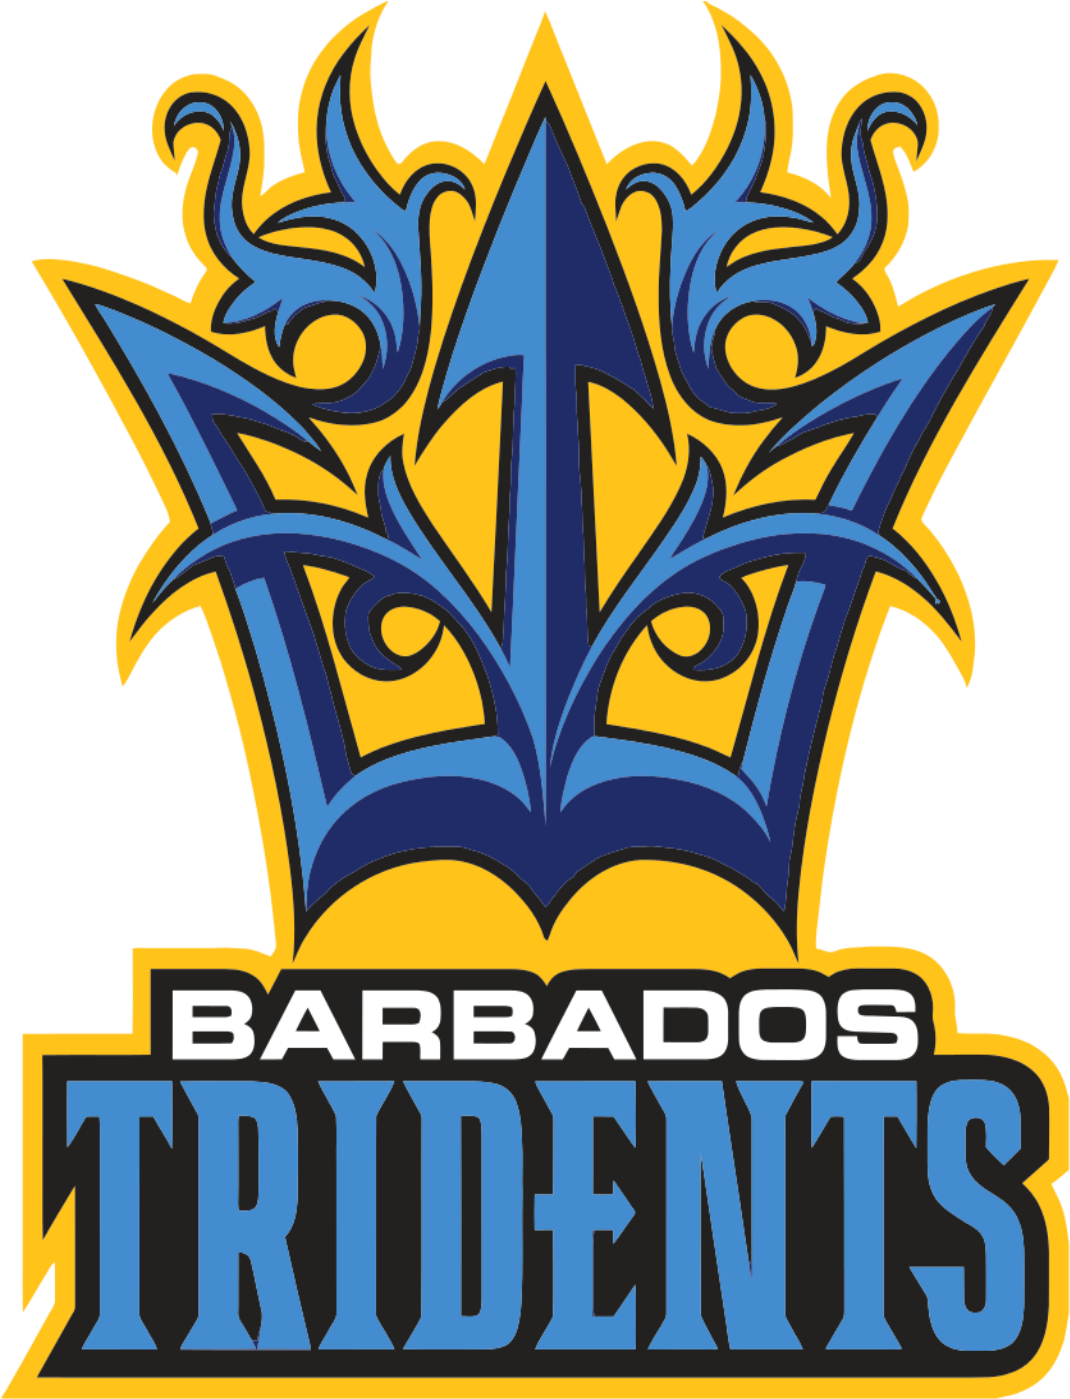 Barbados Tridents 2018 Png - Trinbago Knight Riders Vs Barbados Tridents (1100x1450), Png Download